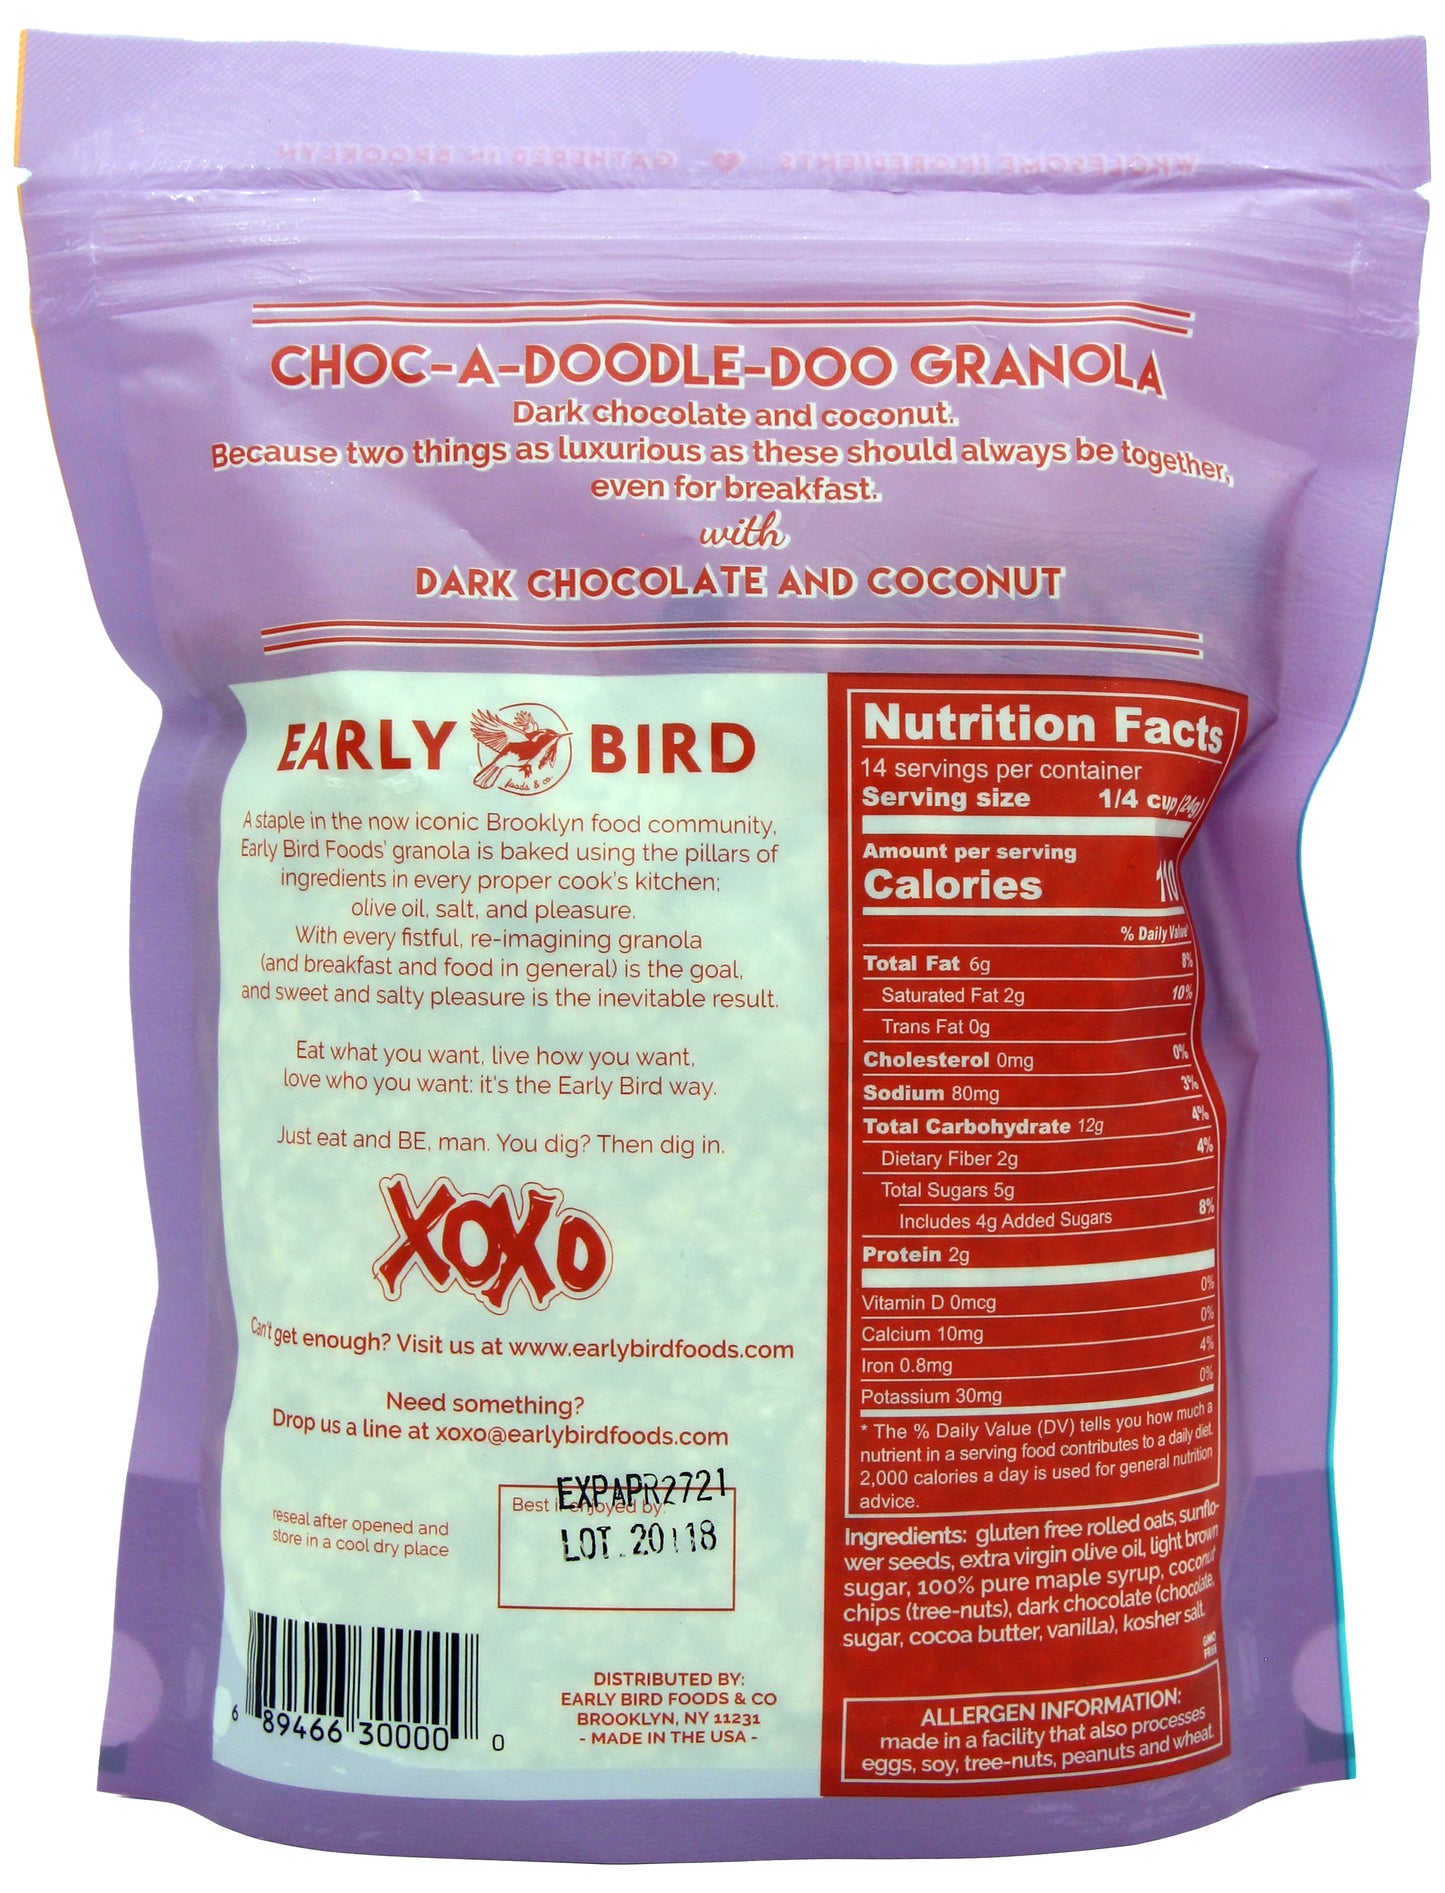 CHOC-A-DOODLE-DOO - Early Bird Foods & Co.